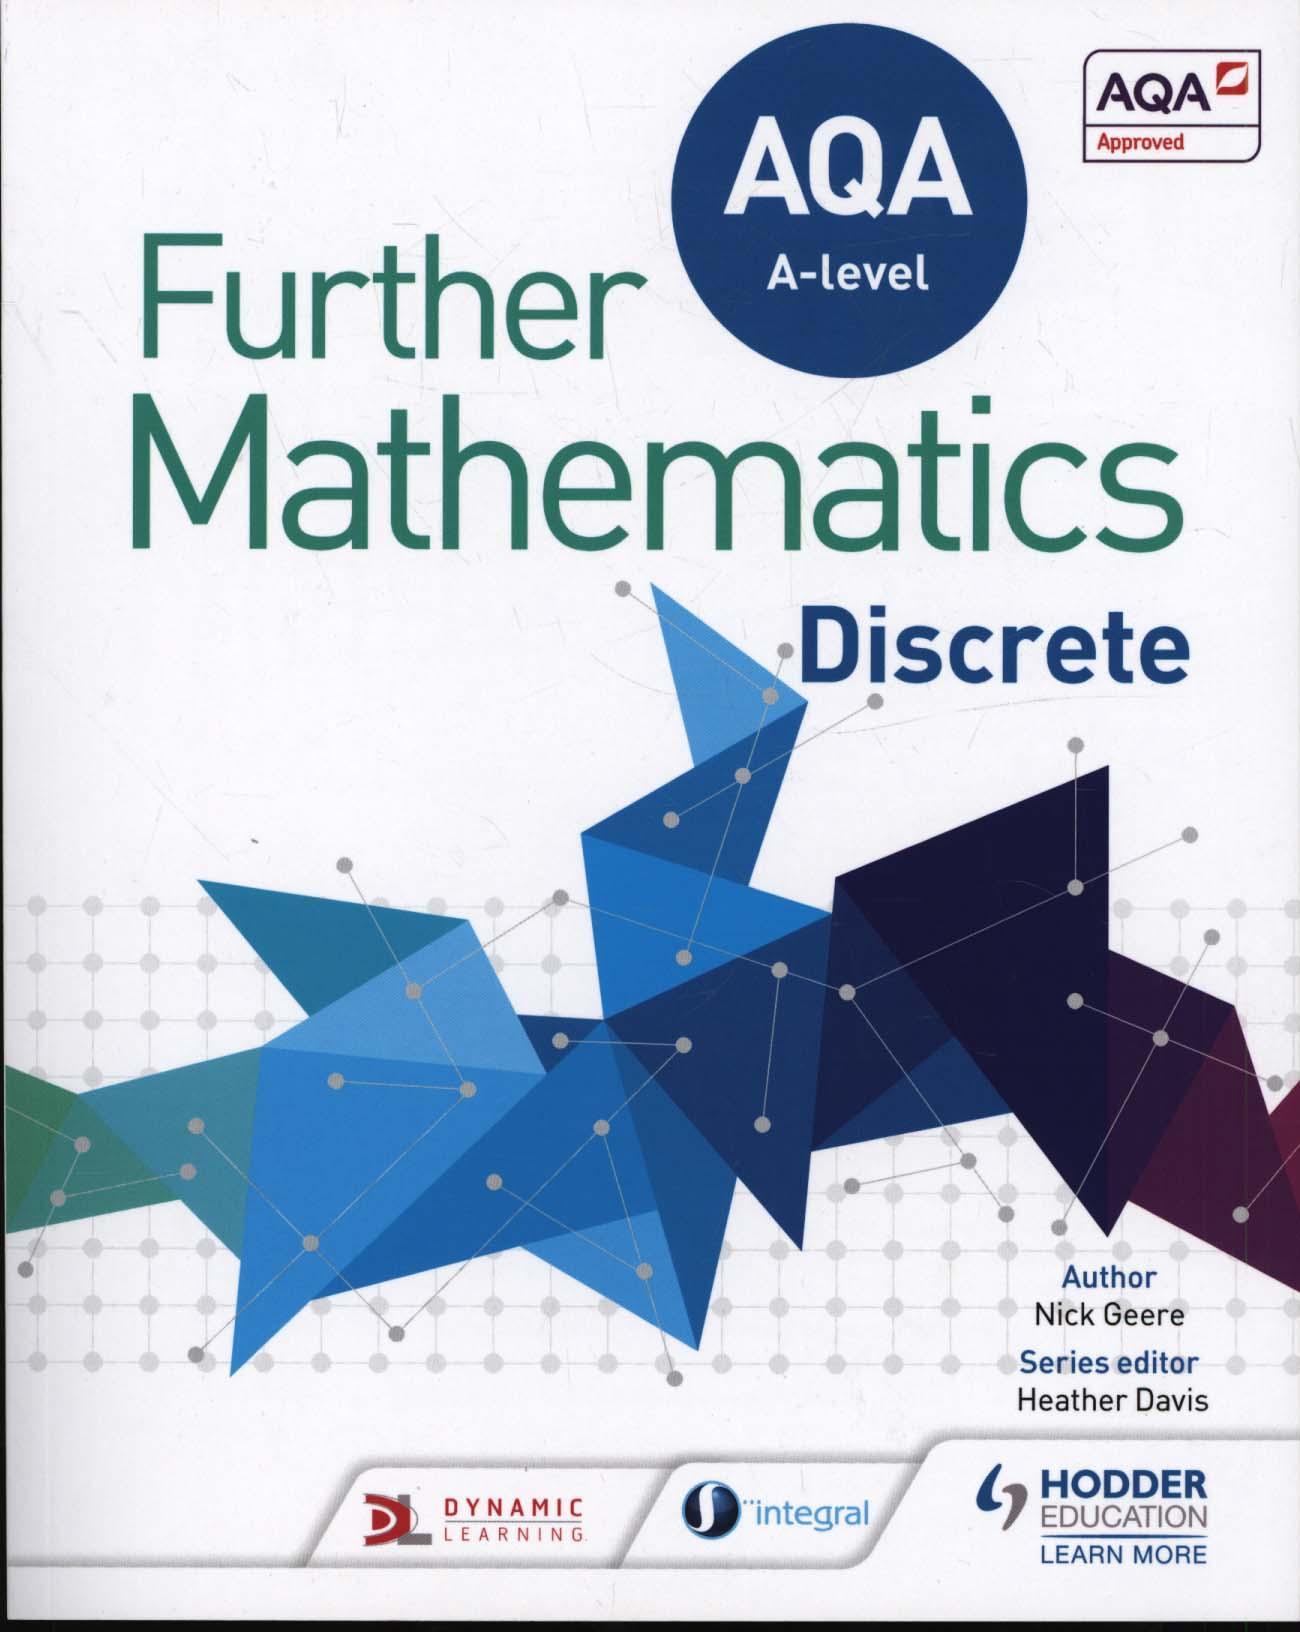 AQA A Level Further Mathematics Discrete - Nick Geere